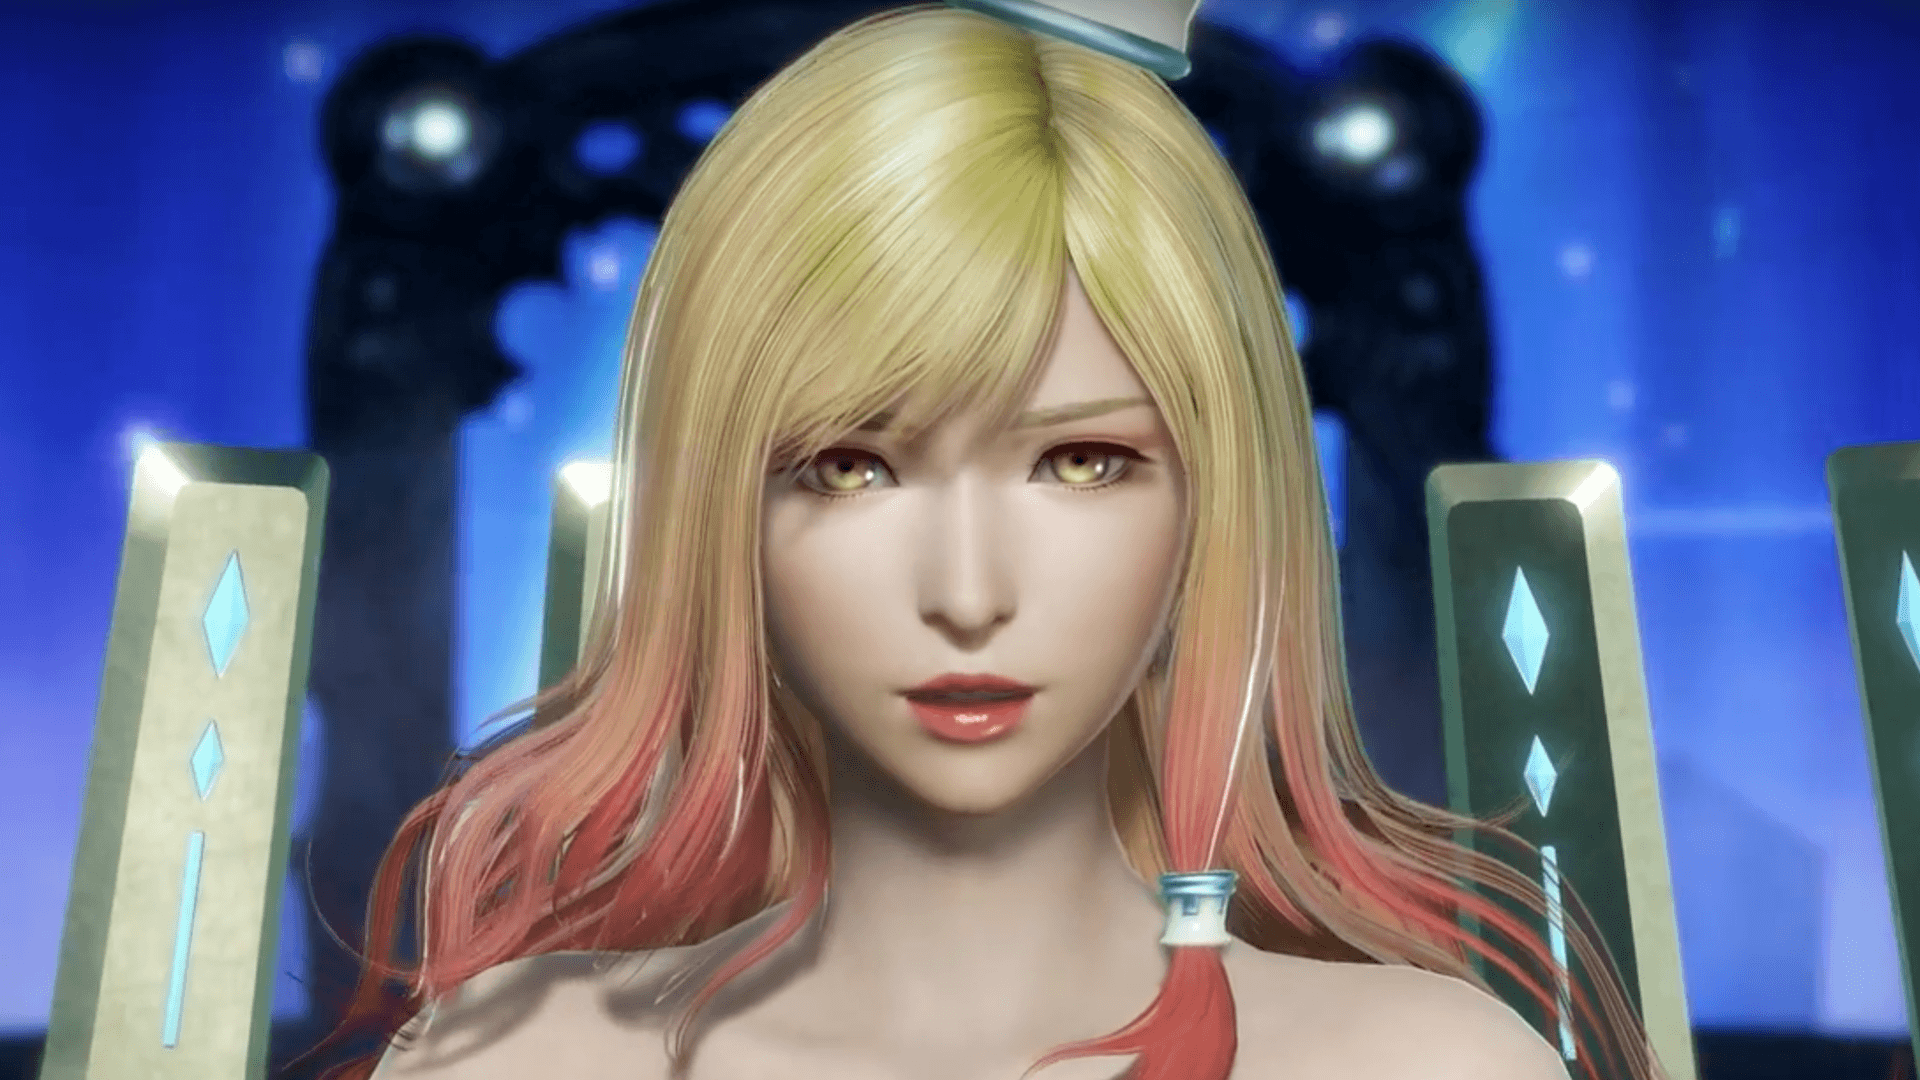 Dissidia Final Fantasy NT Closed Beta Announced